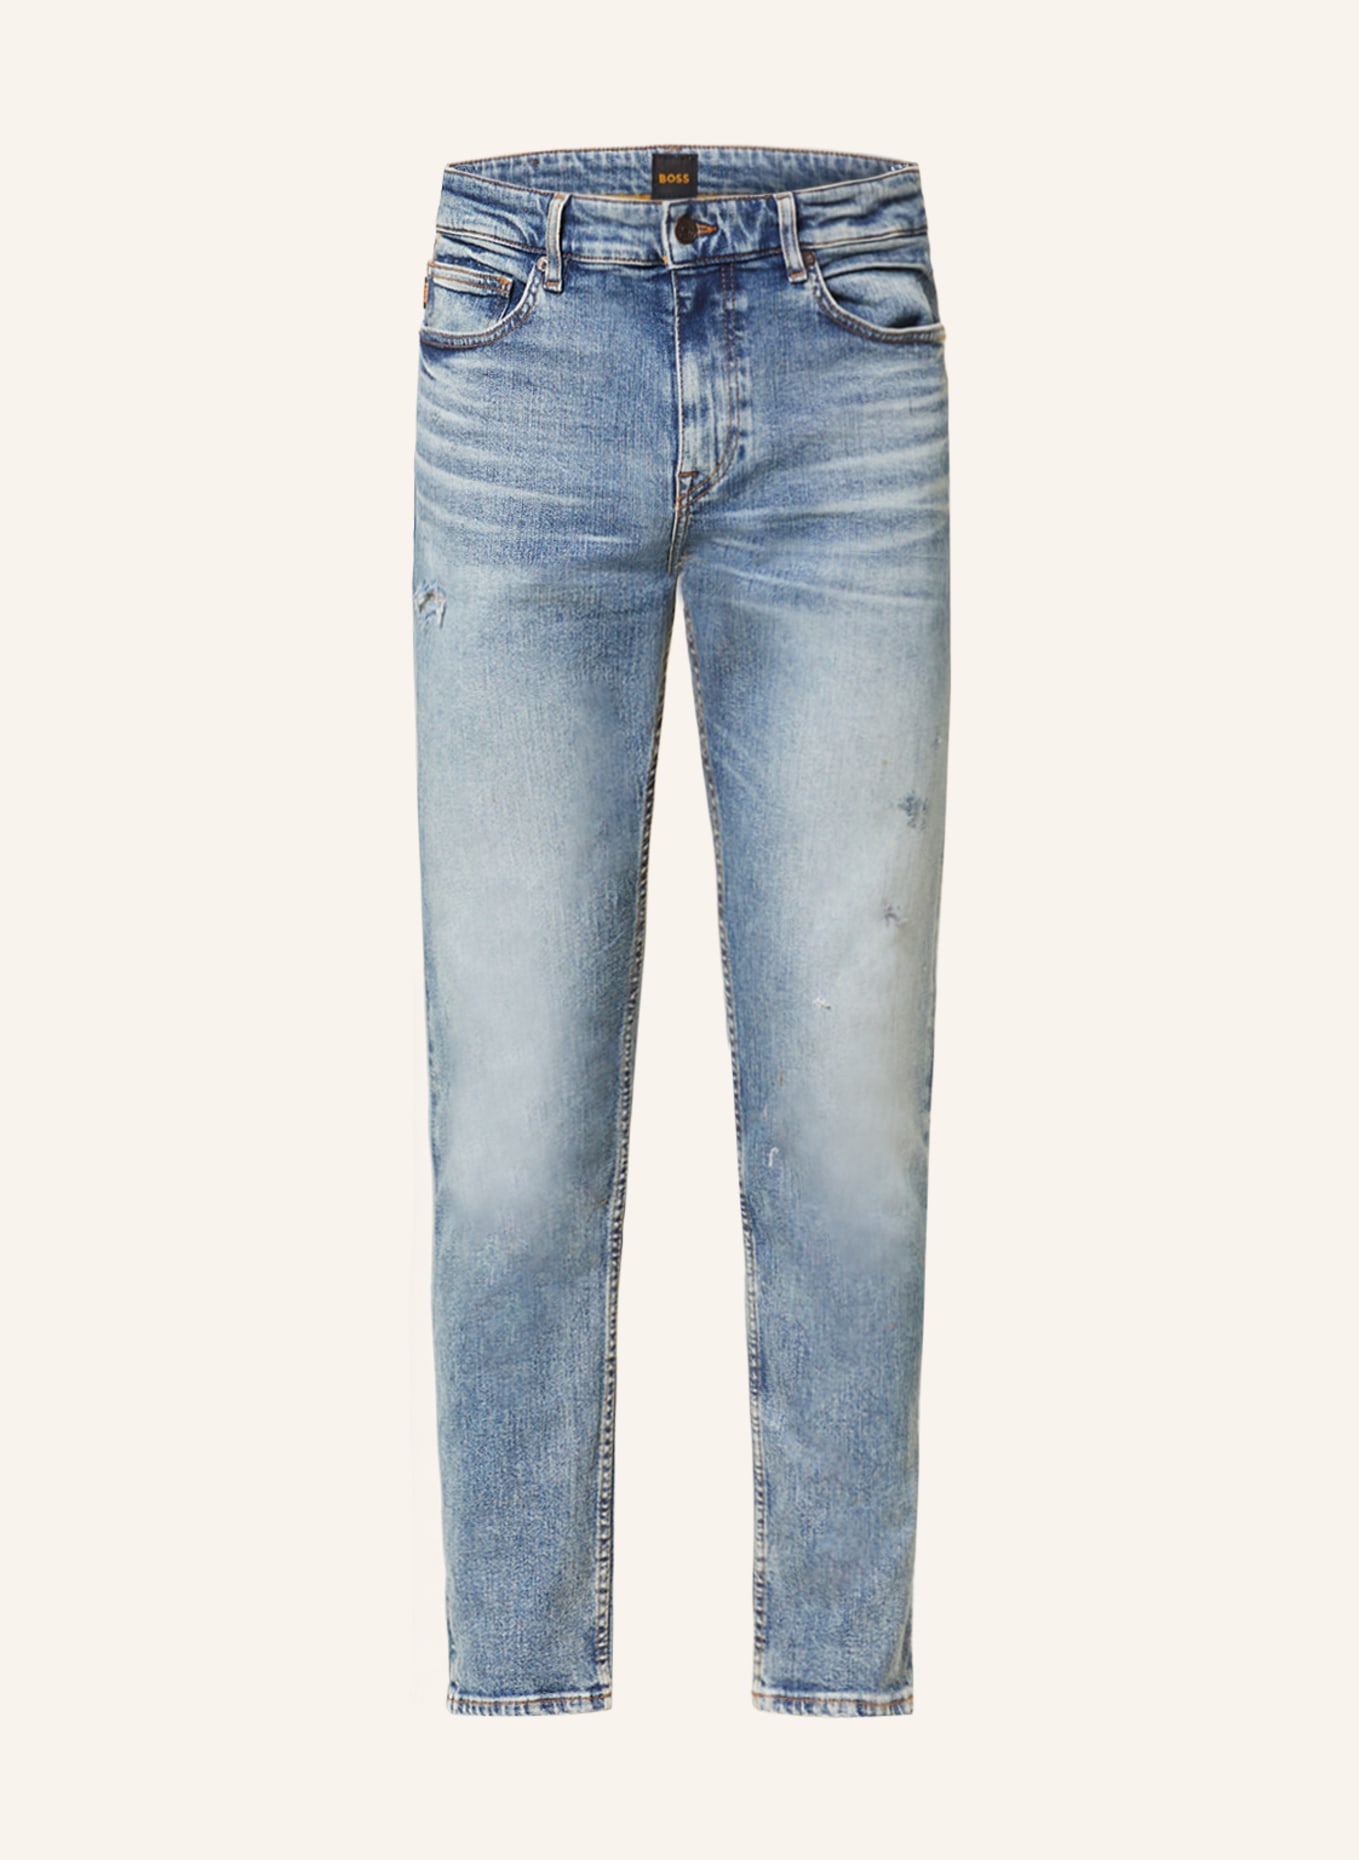 BOSS Jeans DELAWARE Slim Fit, Farbe: 442 TURQUOISE/AQUA(Bild null)